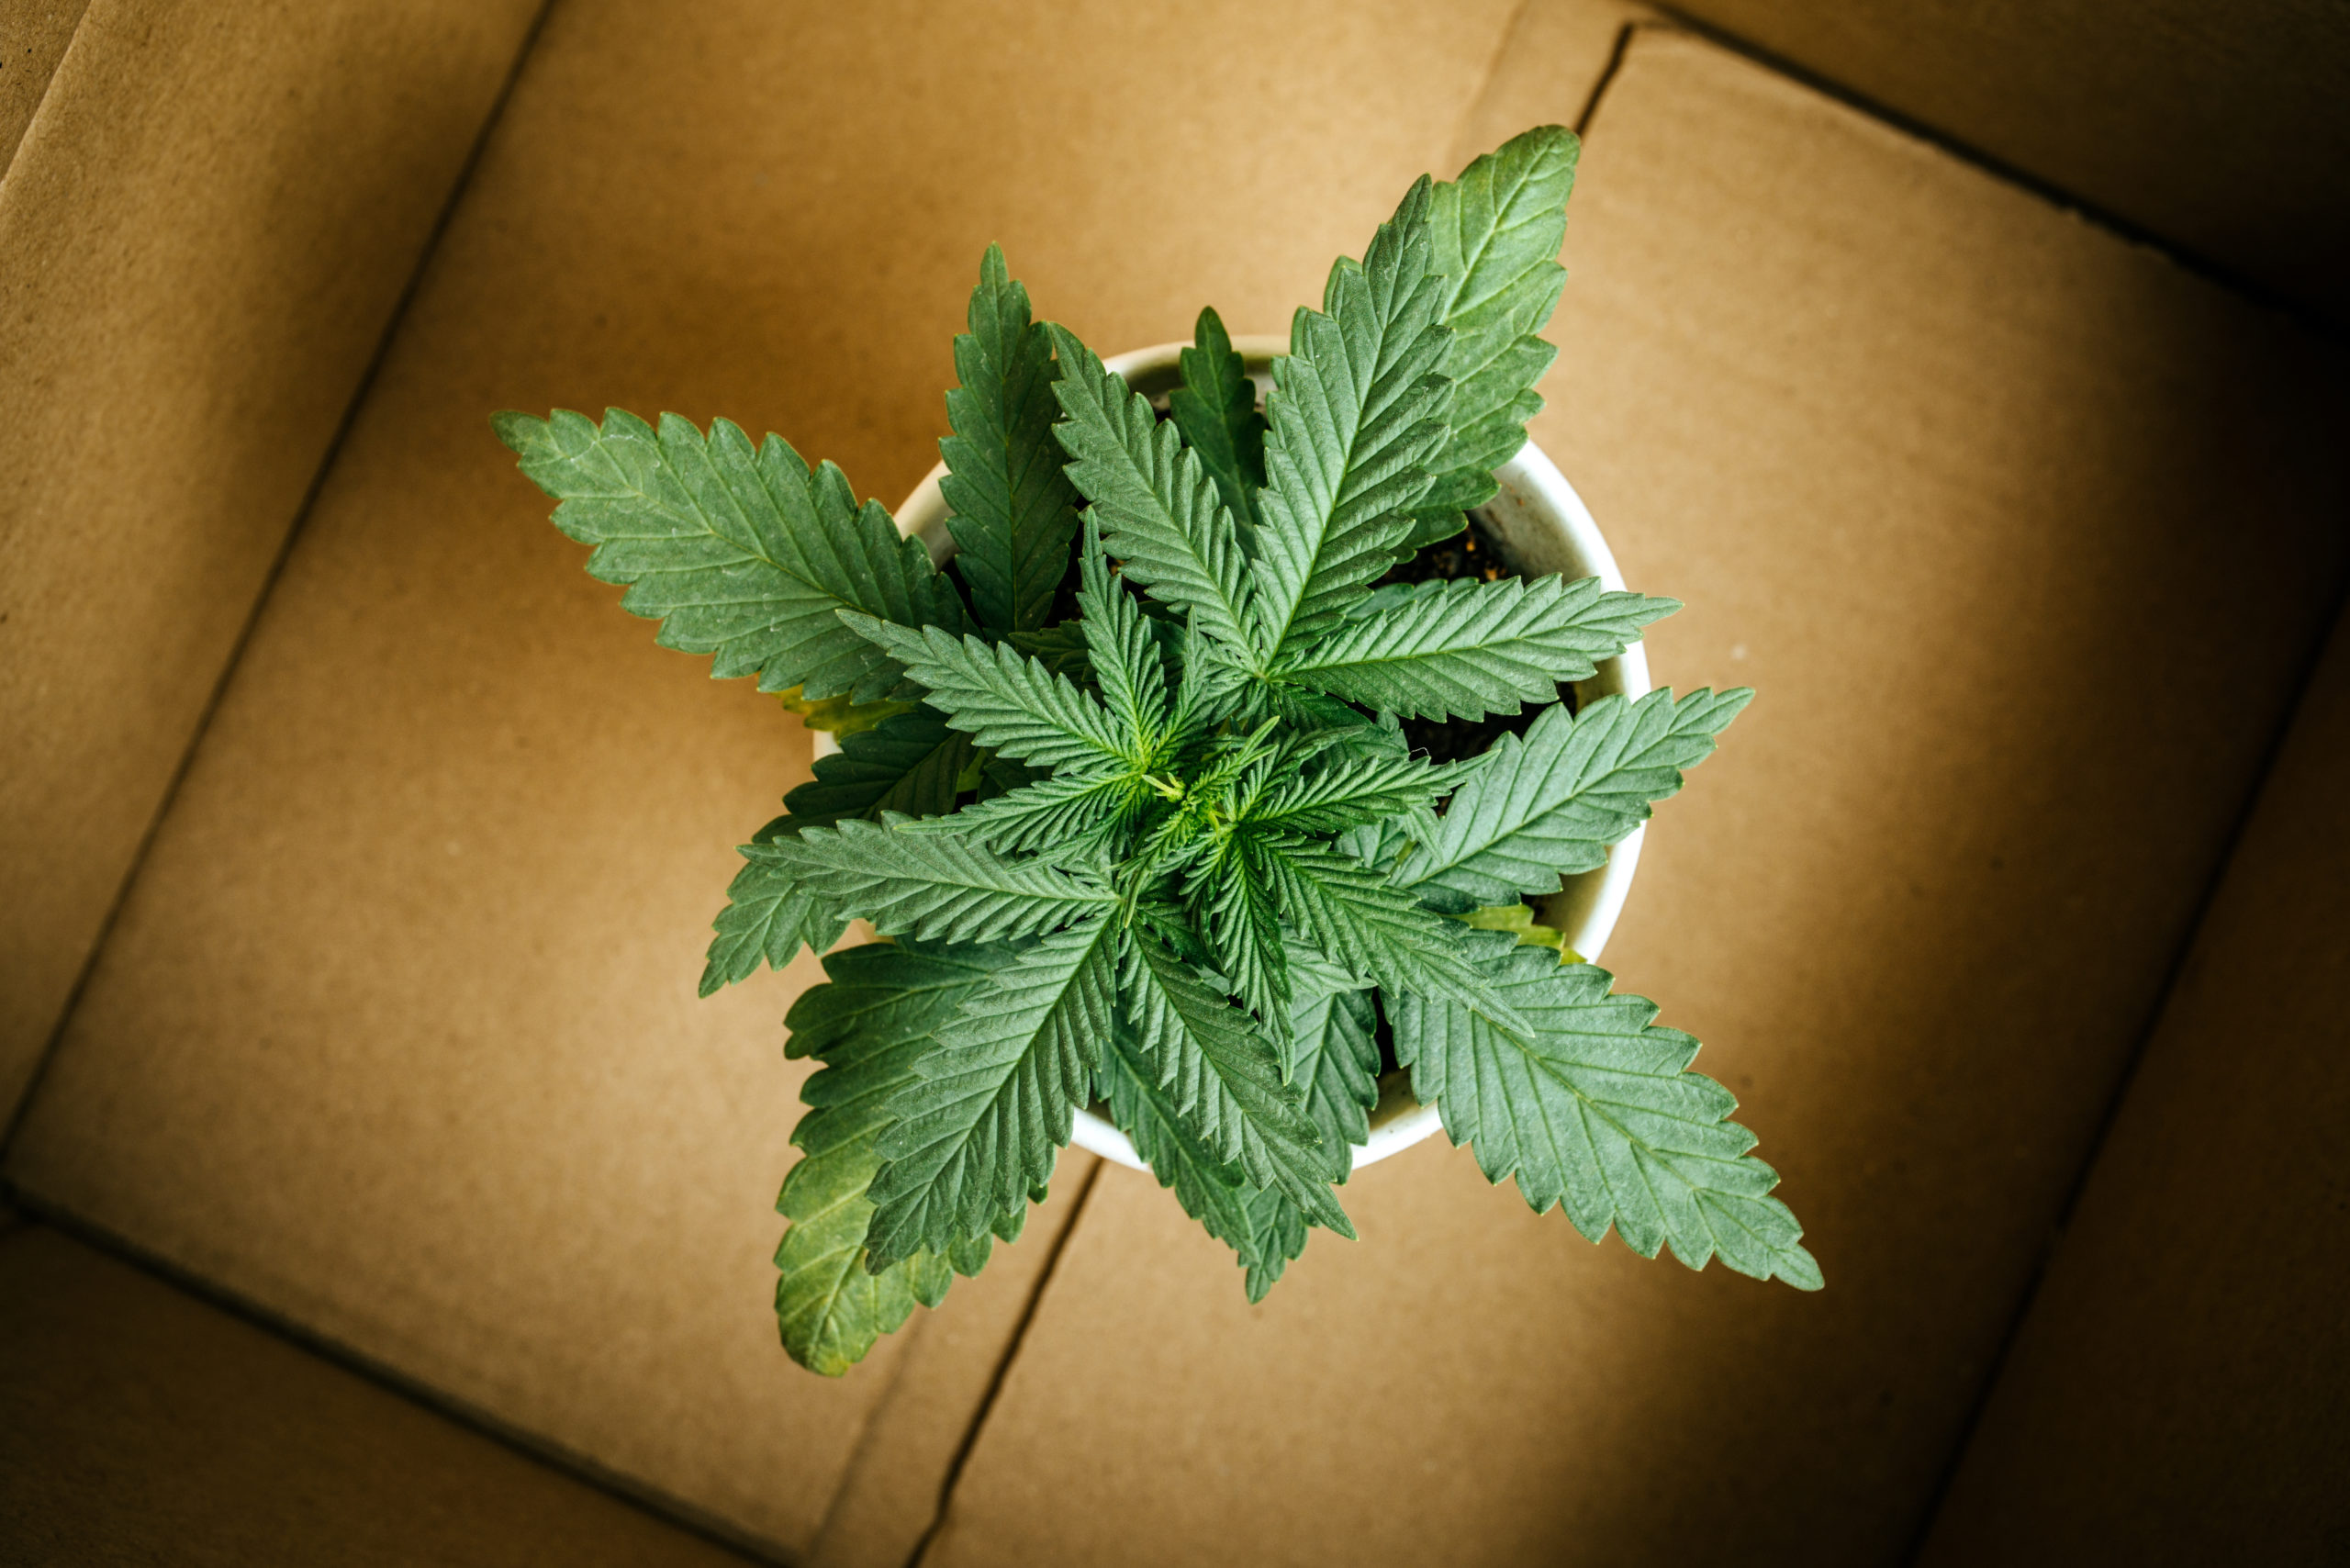 Report: Cannabis Sales Up Among Boomer, Gen Z.